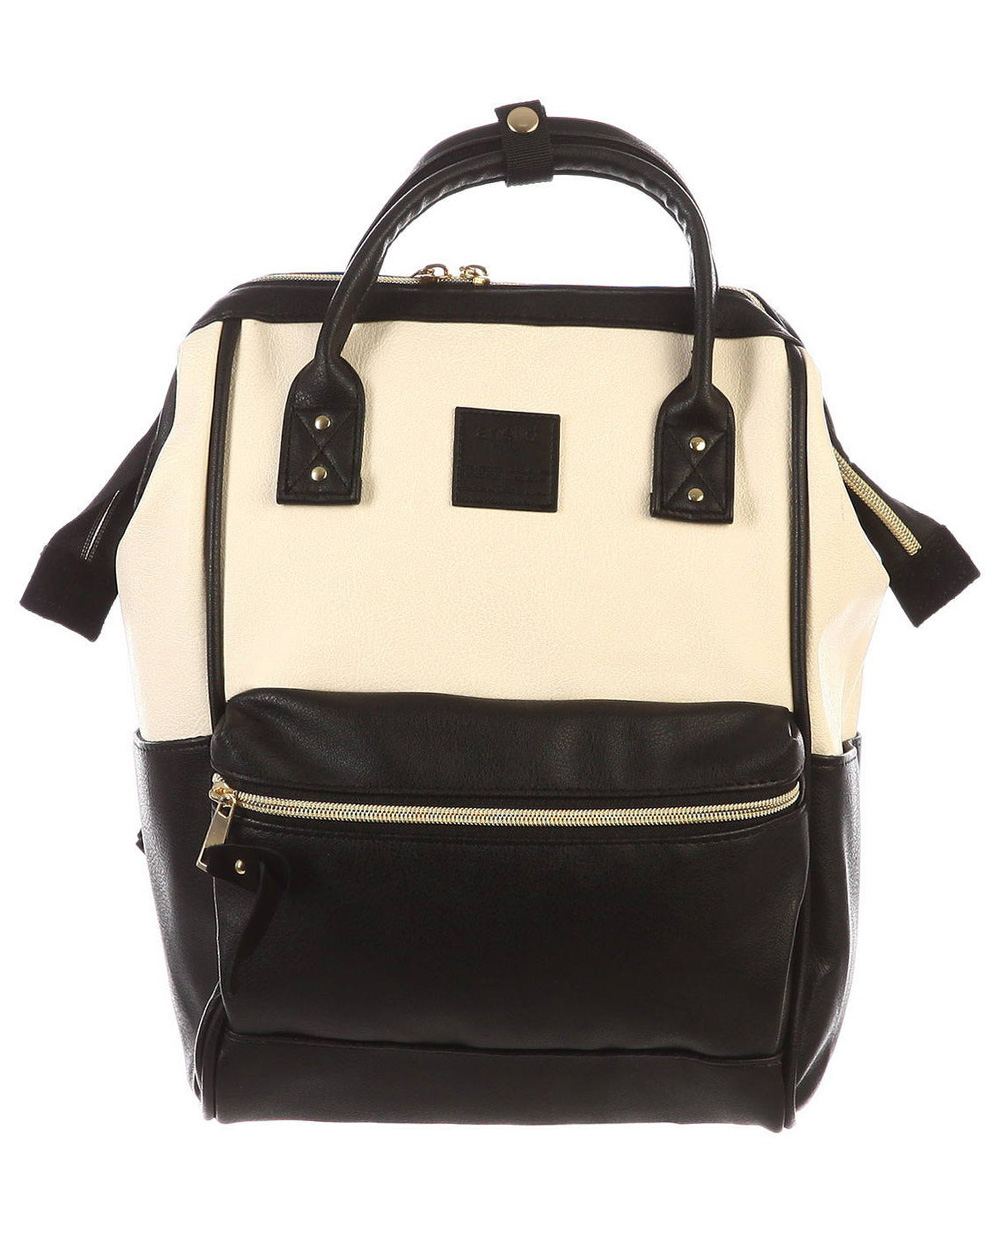 Рюкзак с двумя ручками кожаный Anello Japan AT-B1212 Black White отзывы